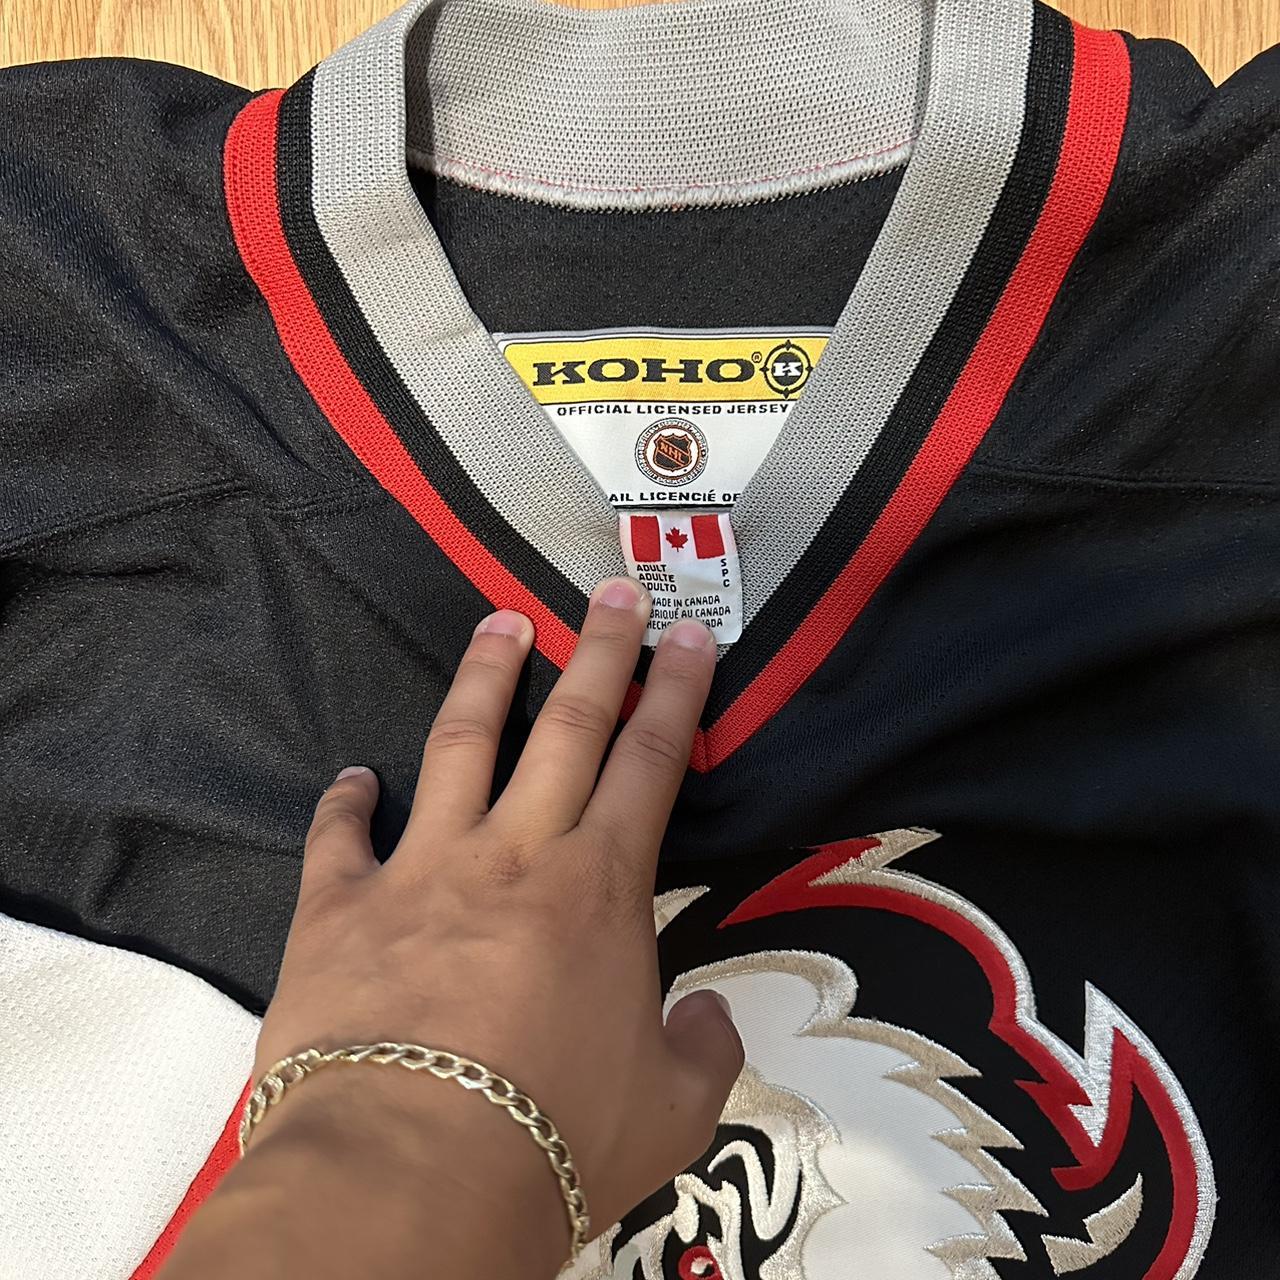 90s Buffalo Sabres vintage Hockey jersey rare CCM - Depop